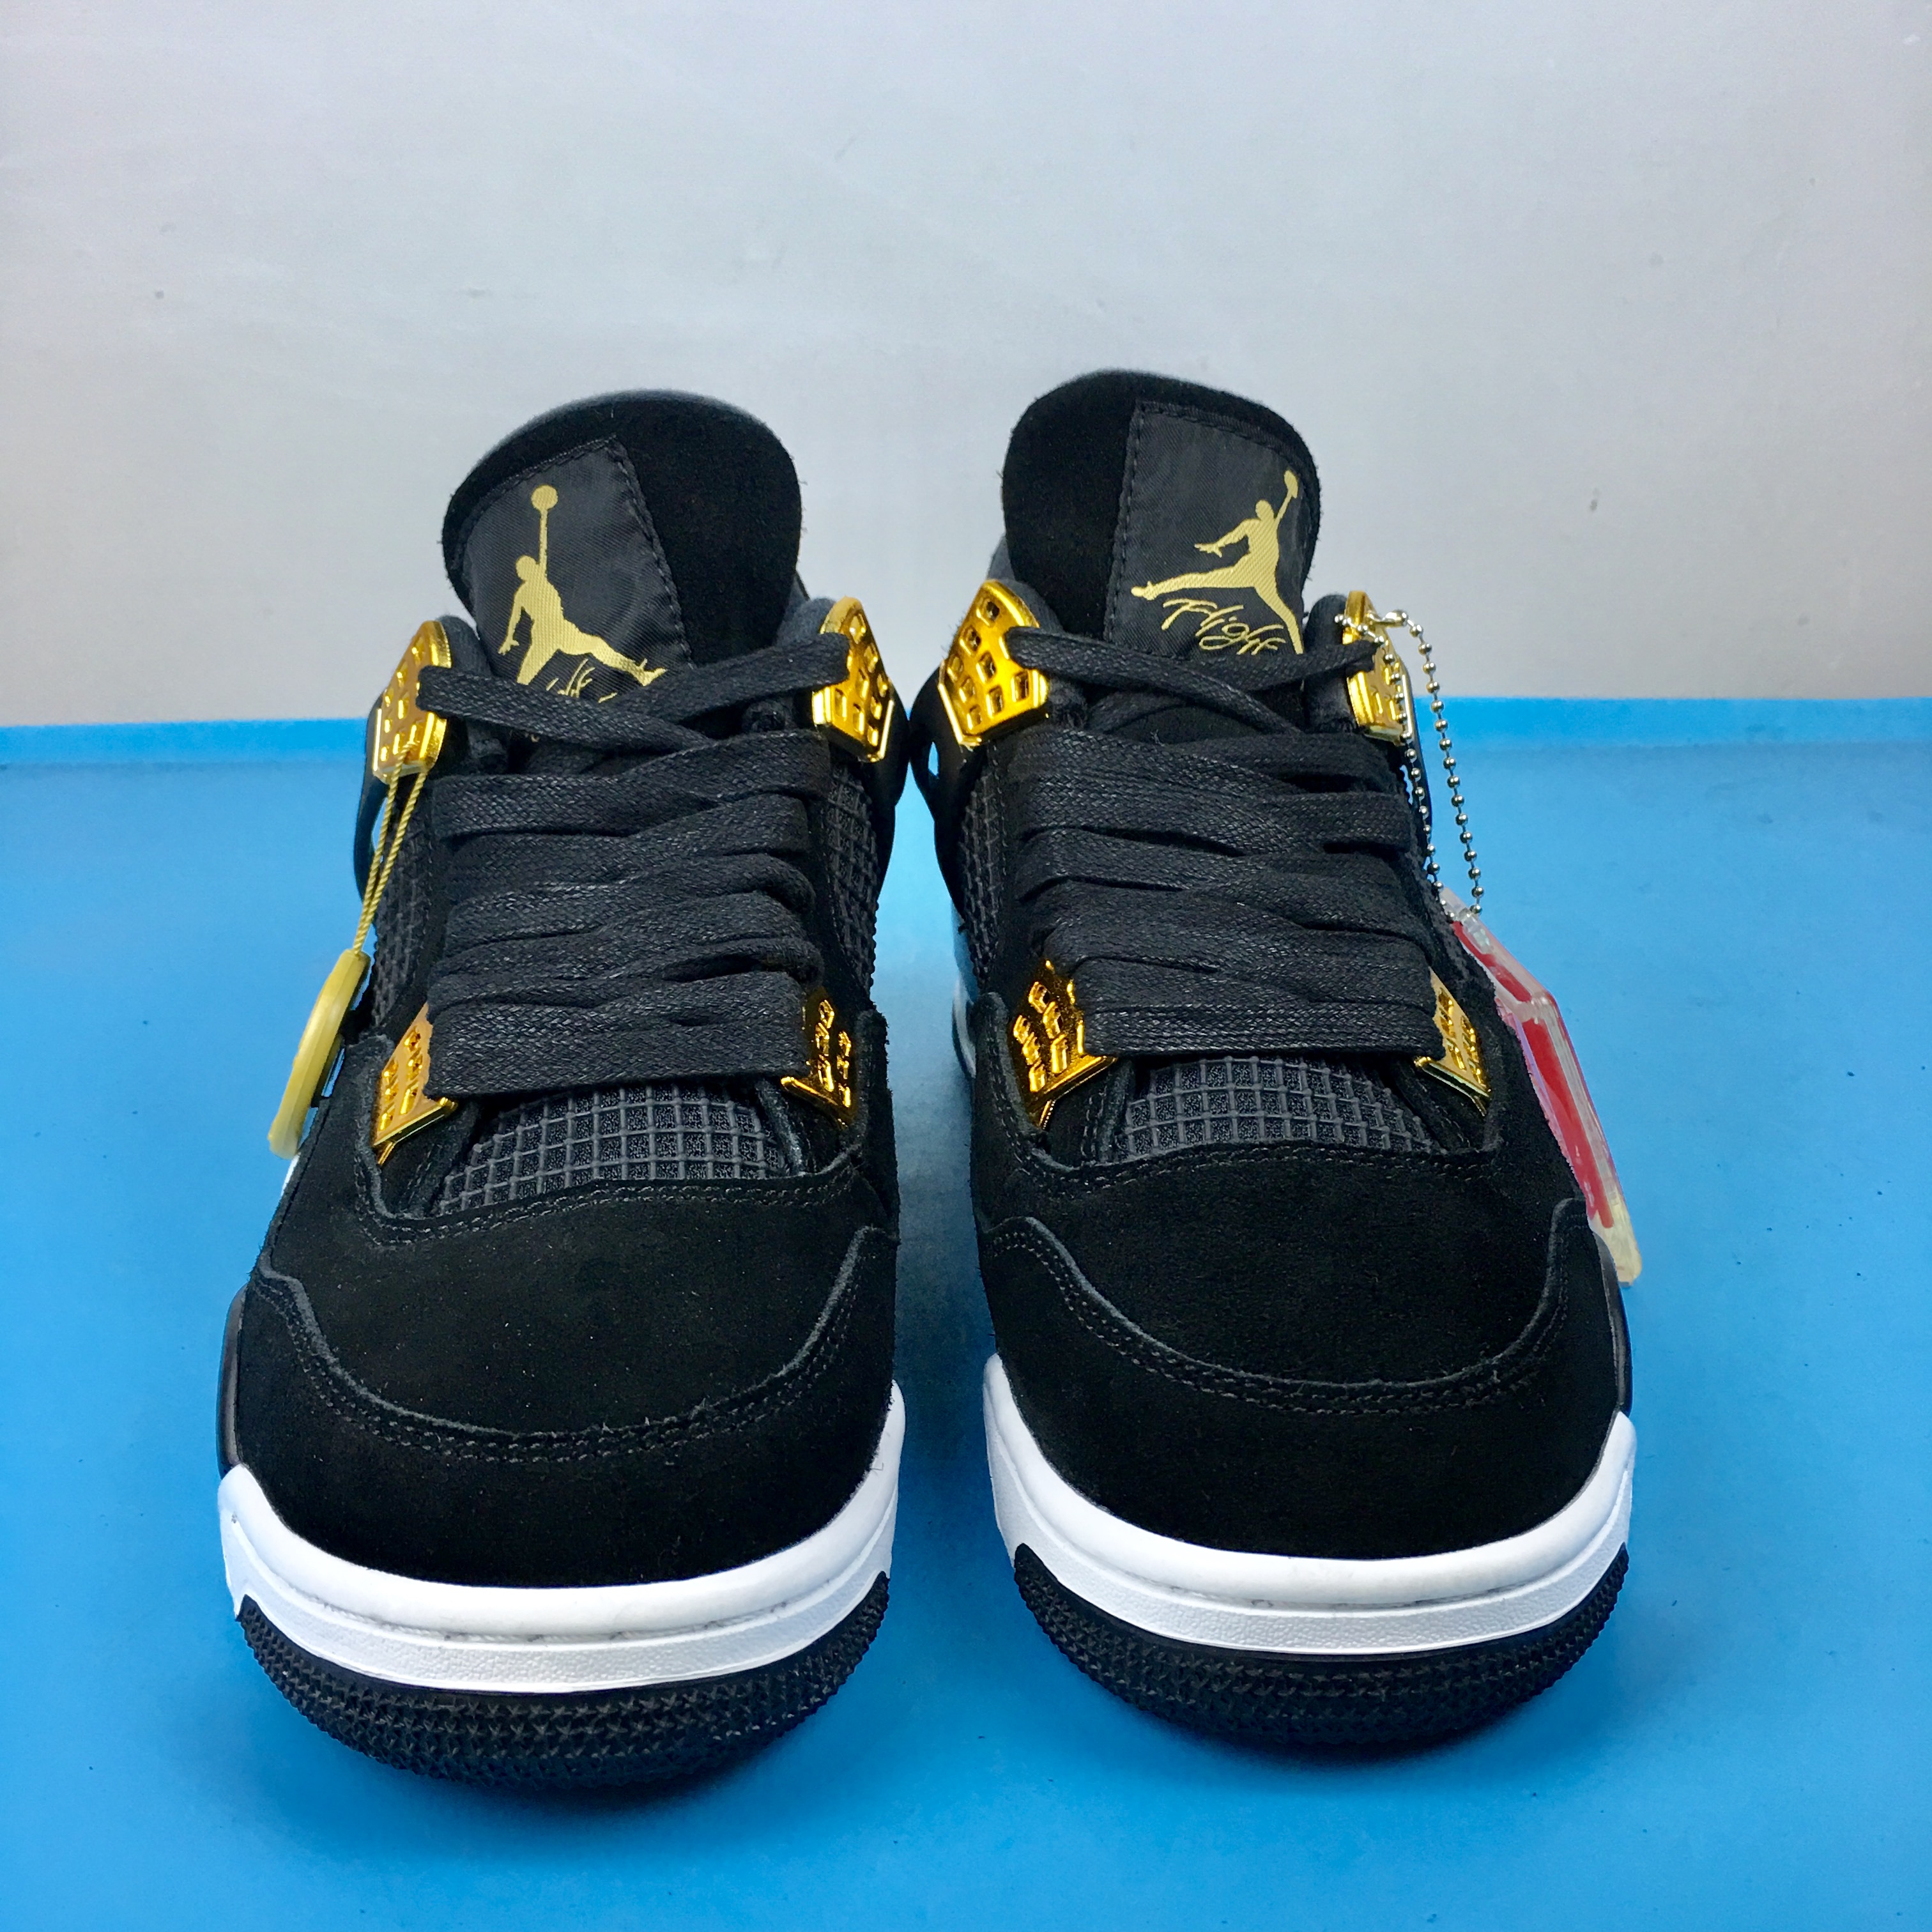 Air Jordan 4 Royalty Black Gold Shoes